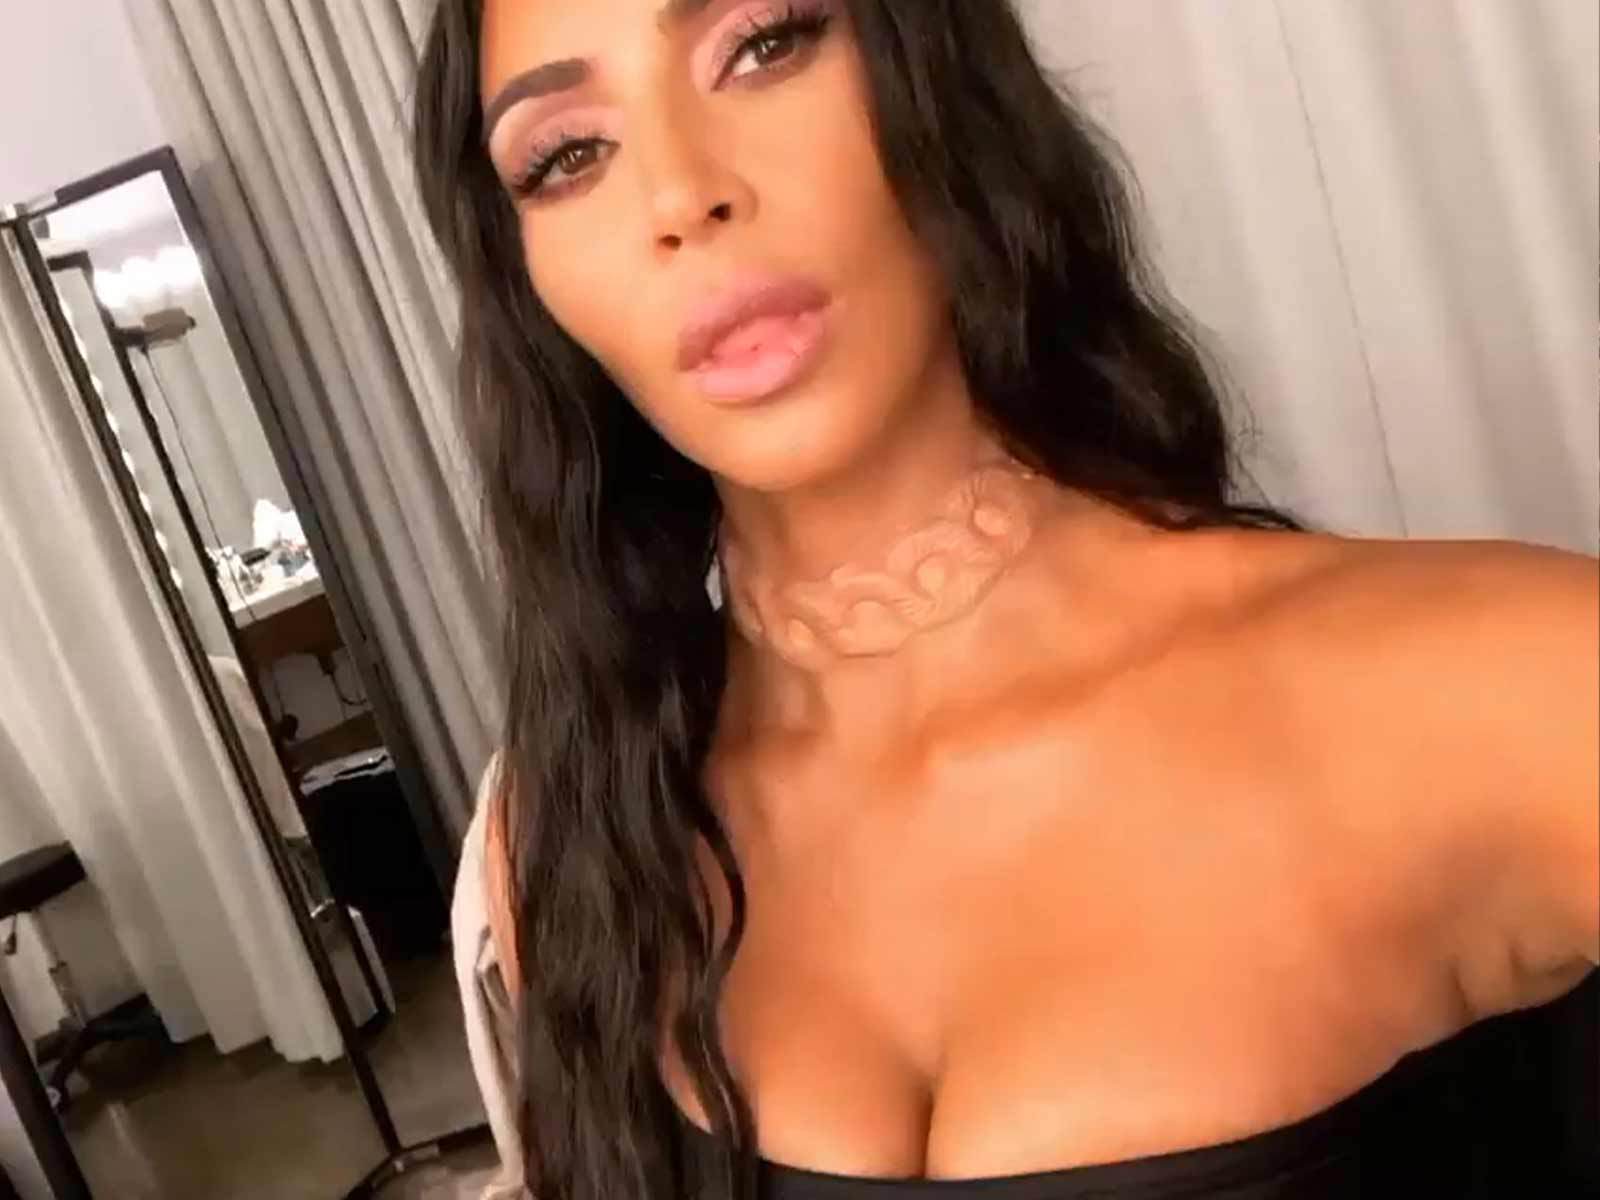 Kim Kardashian, Chrissy Teigen Preview Freaky Fashion 'Implants' Ahead of 2018 NYFW